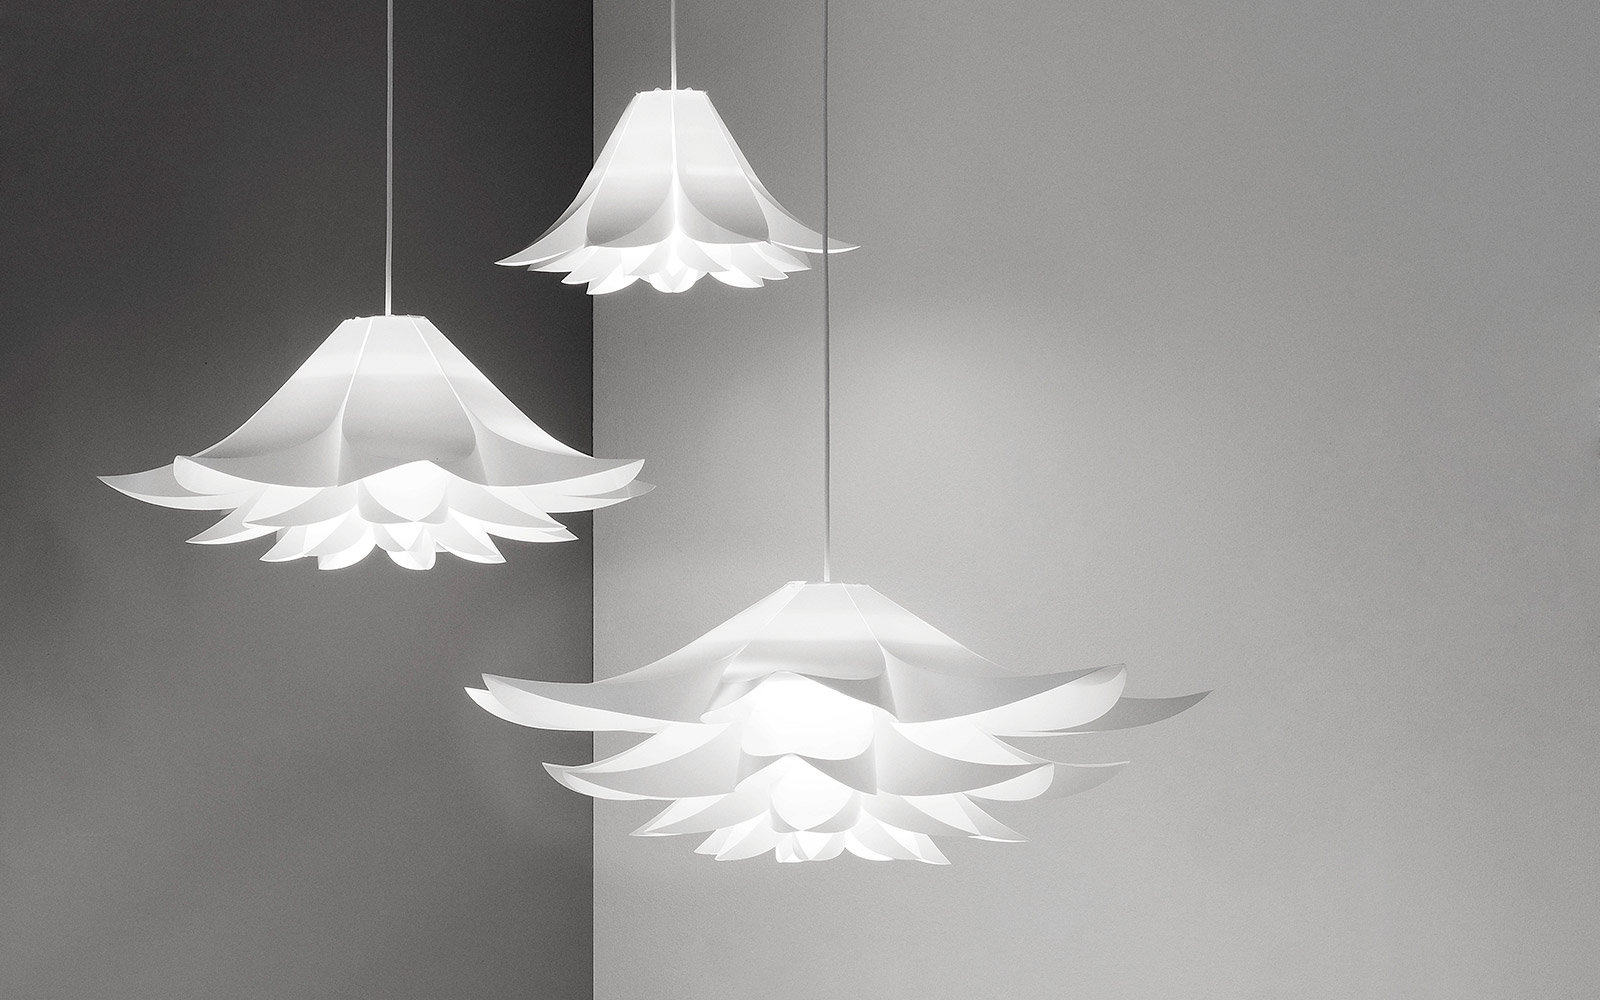 Norm06 | A minimalistic, floating pendant lamp